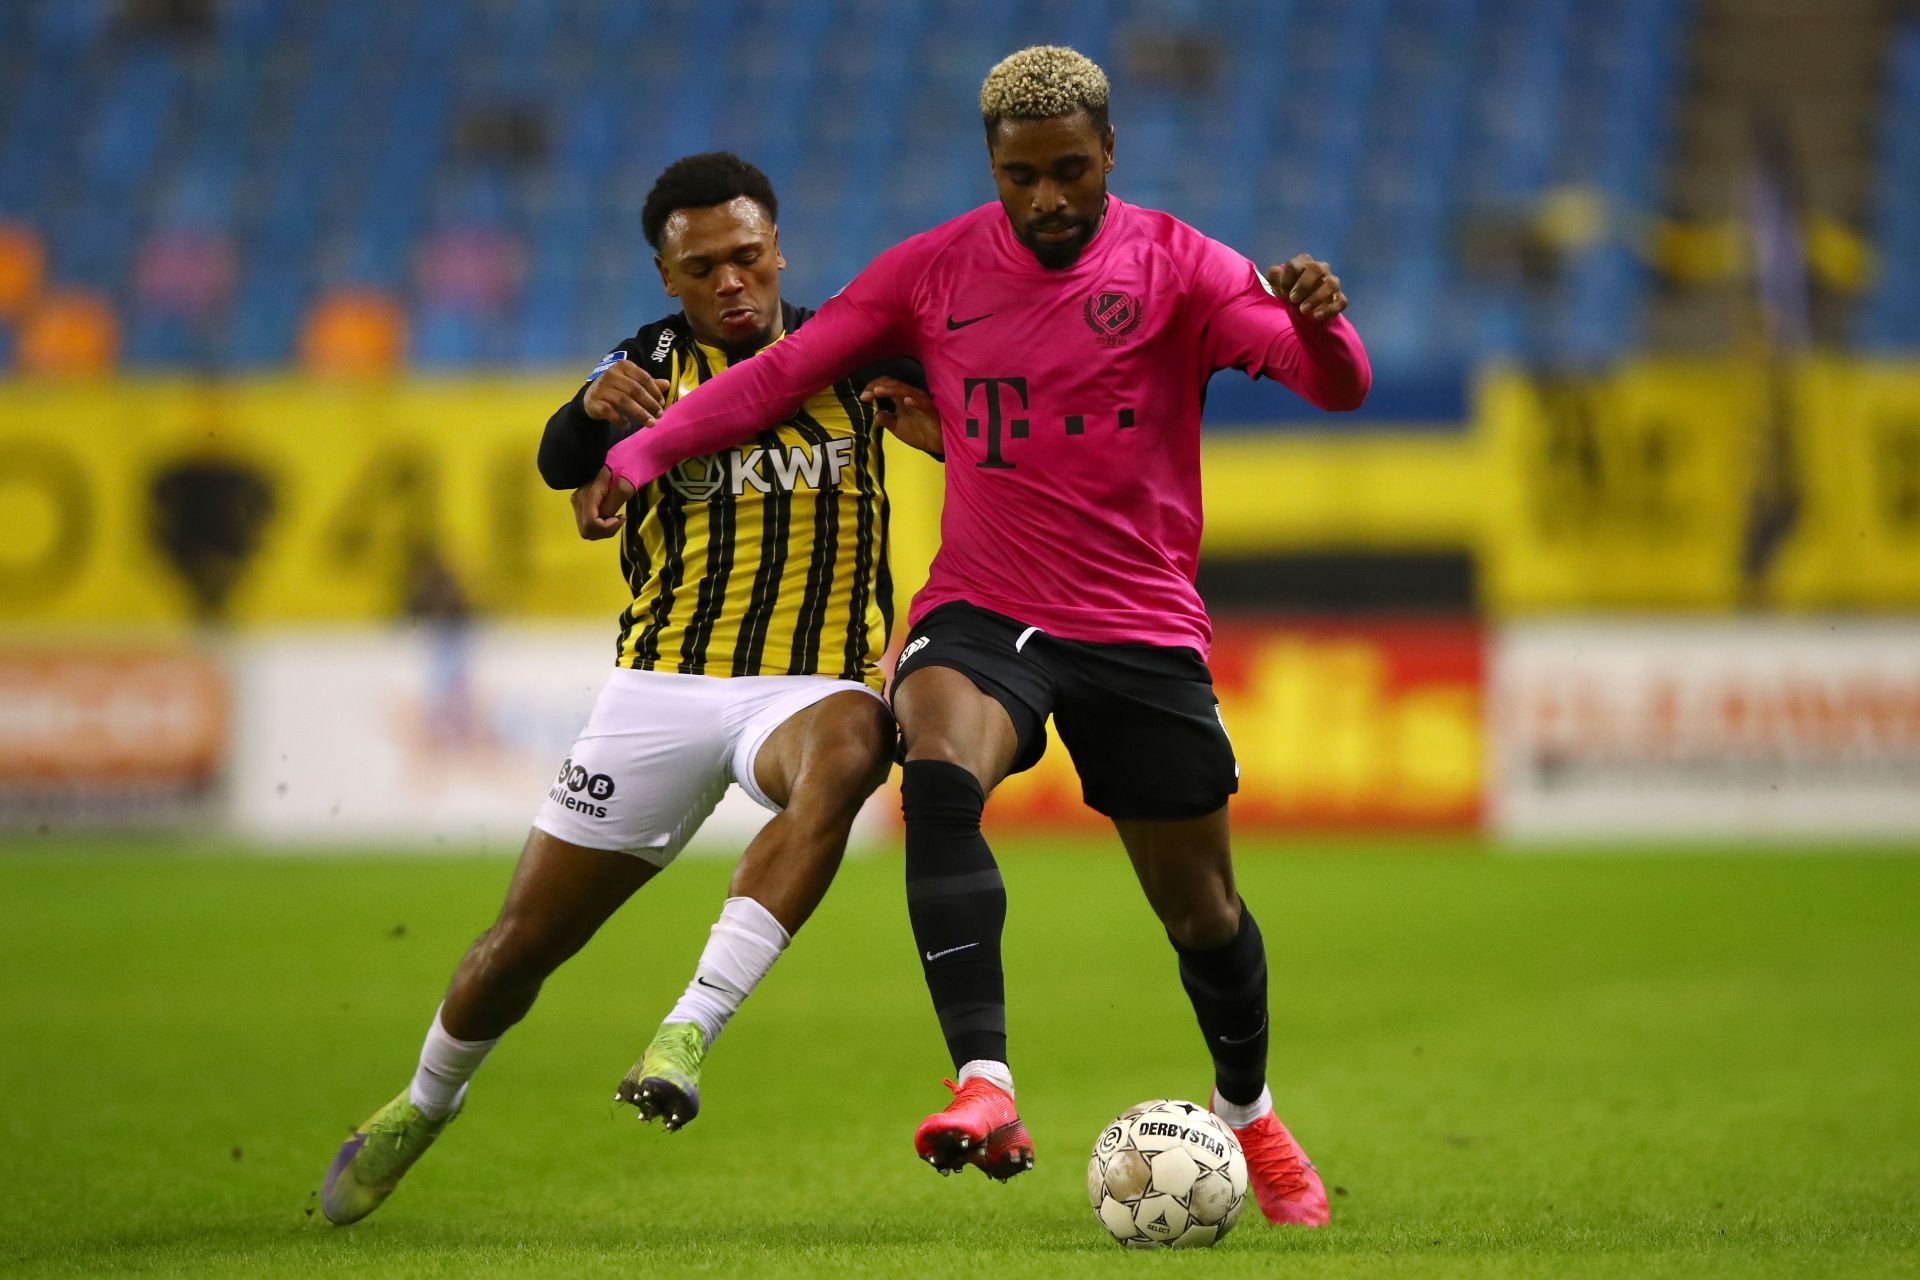 Vitesse play host to Utrecht on Sunday